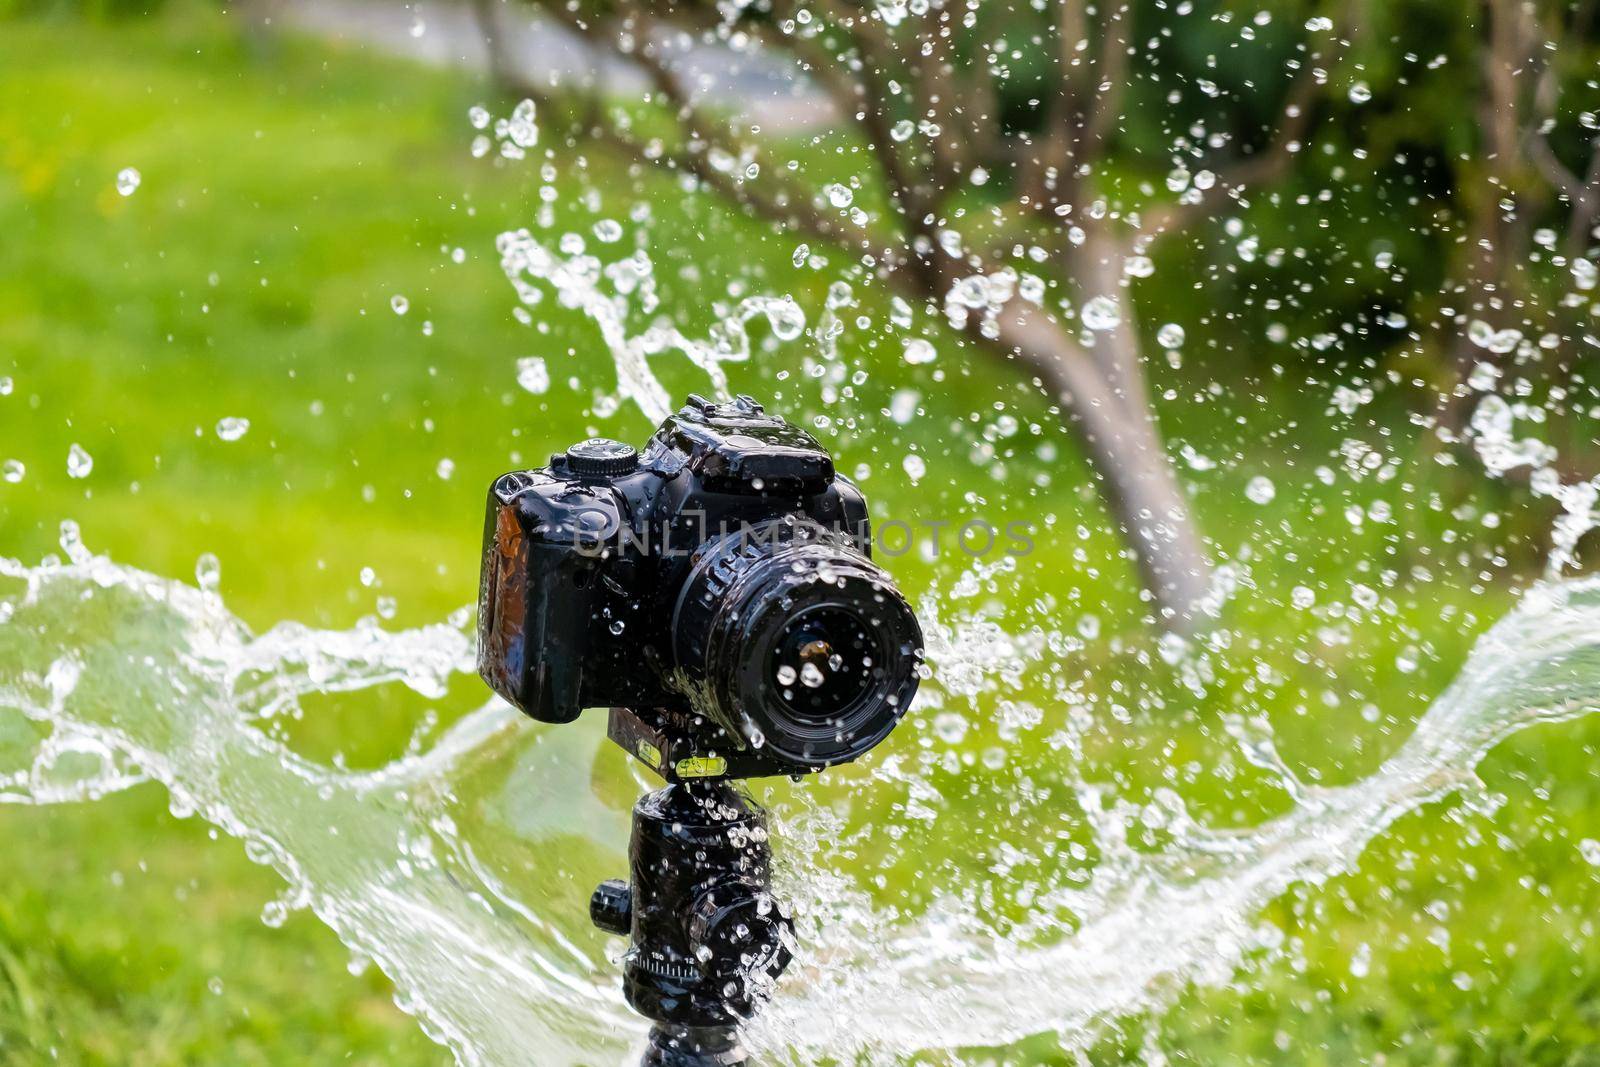 A digital camera on a tripod in the rain by mrwed54